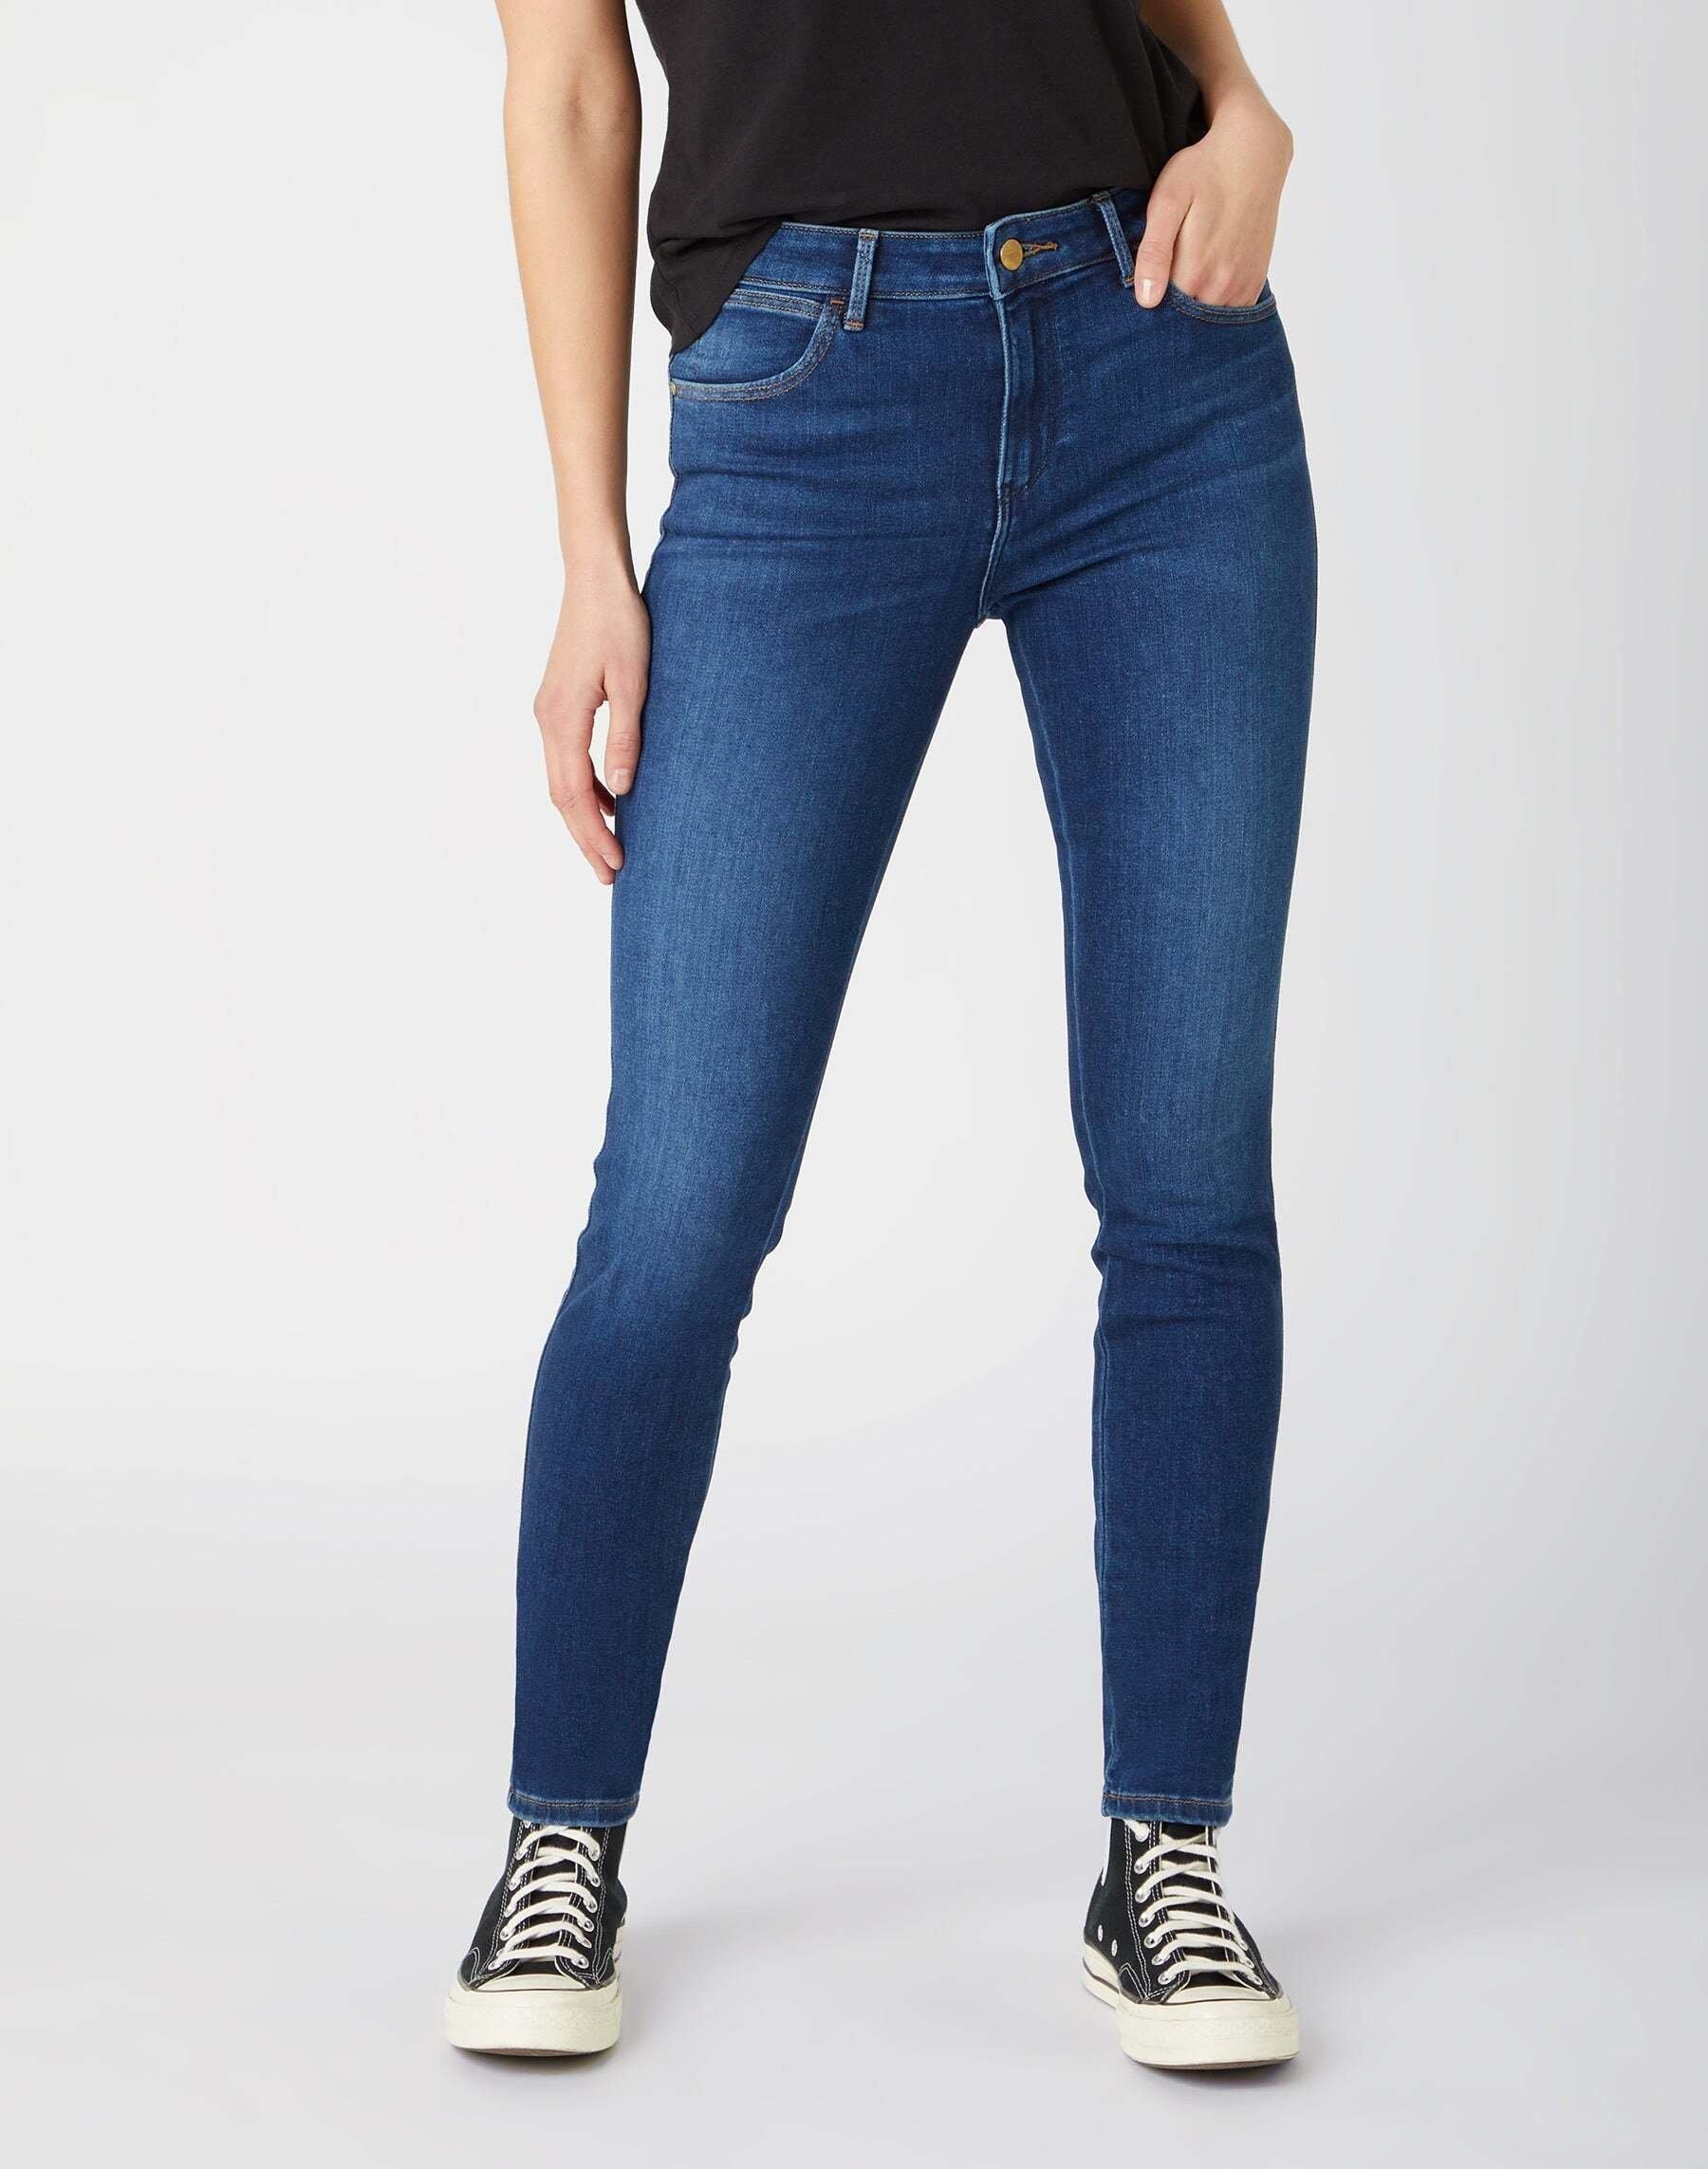 Jeans Skinny Fit Skinny Damen Blau Denim L34/W29 von Wrangler